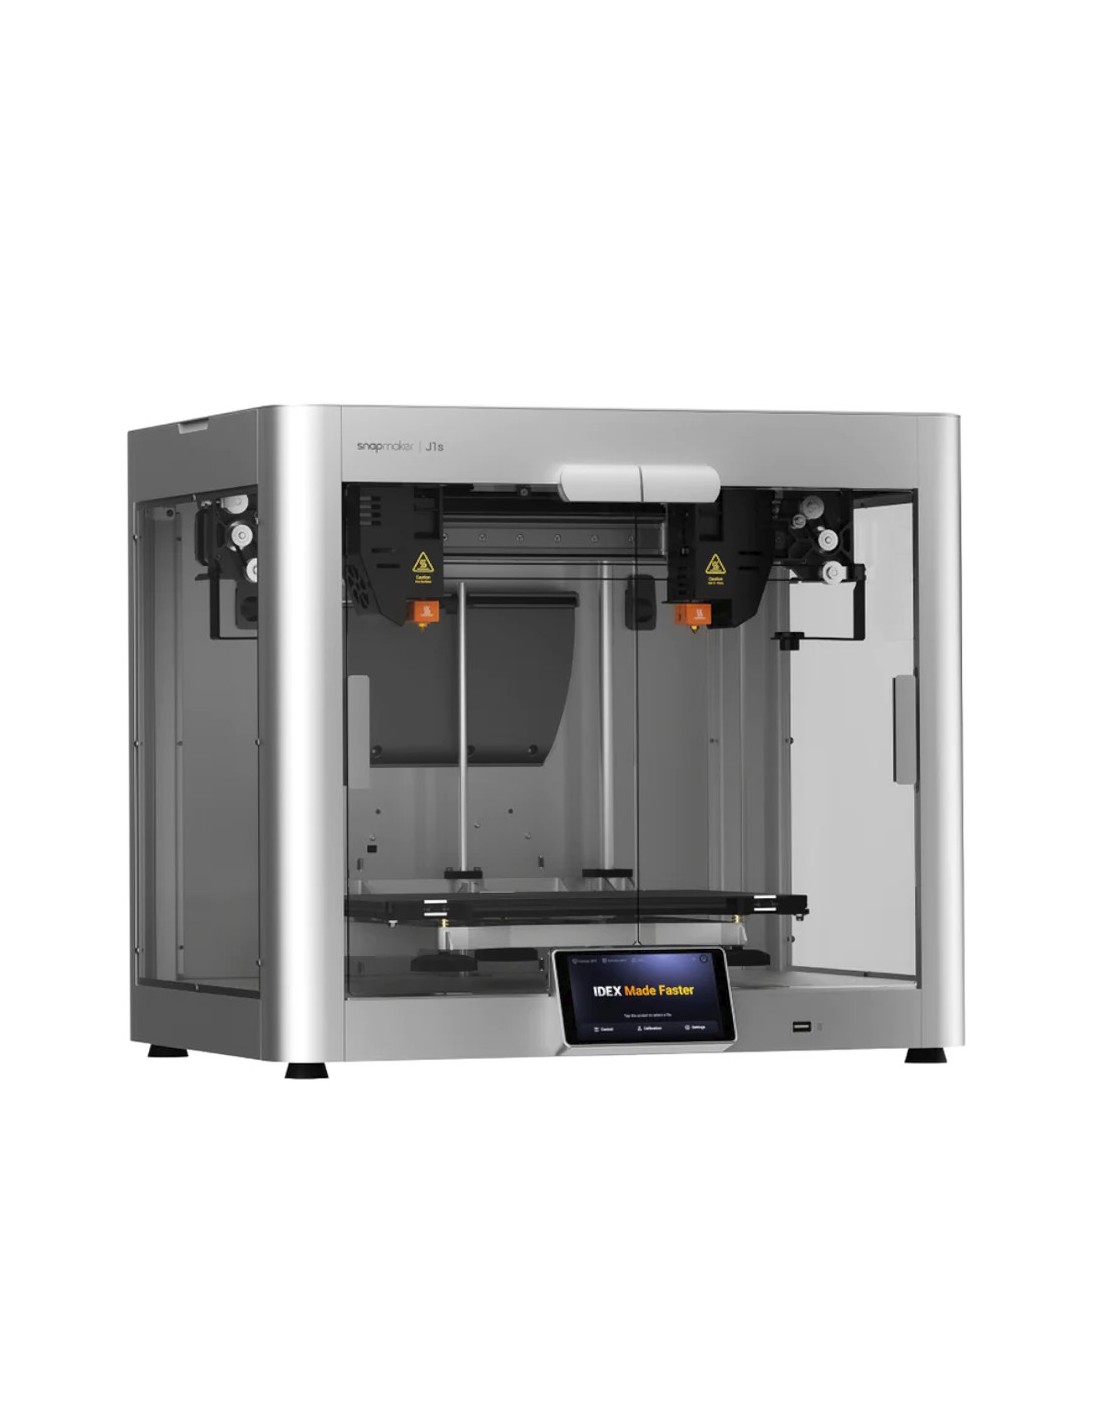 Snapmaker J1S - impresora 3D